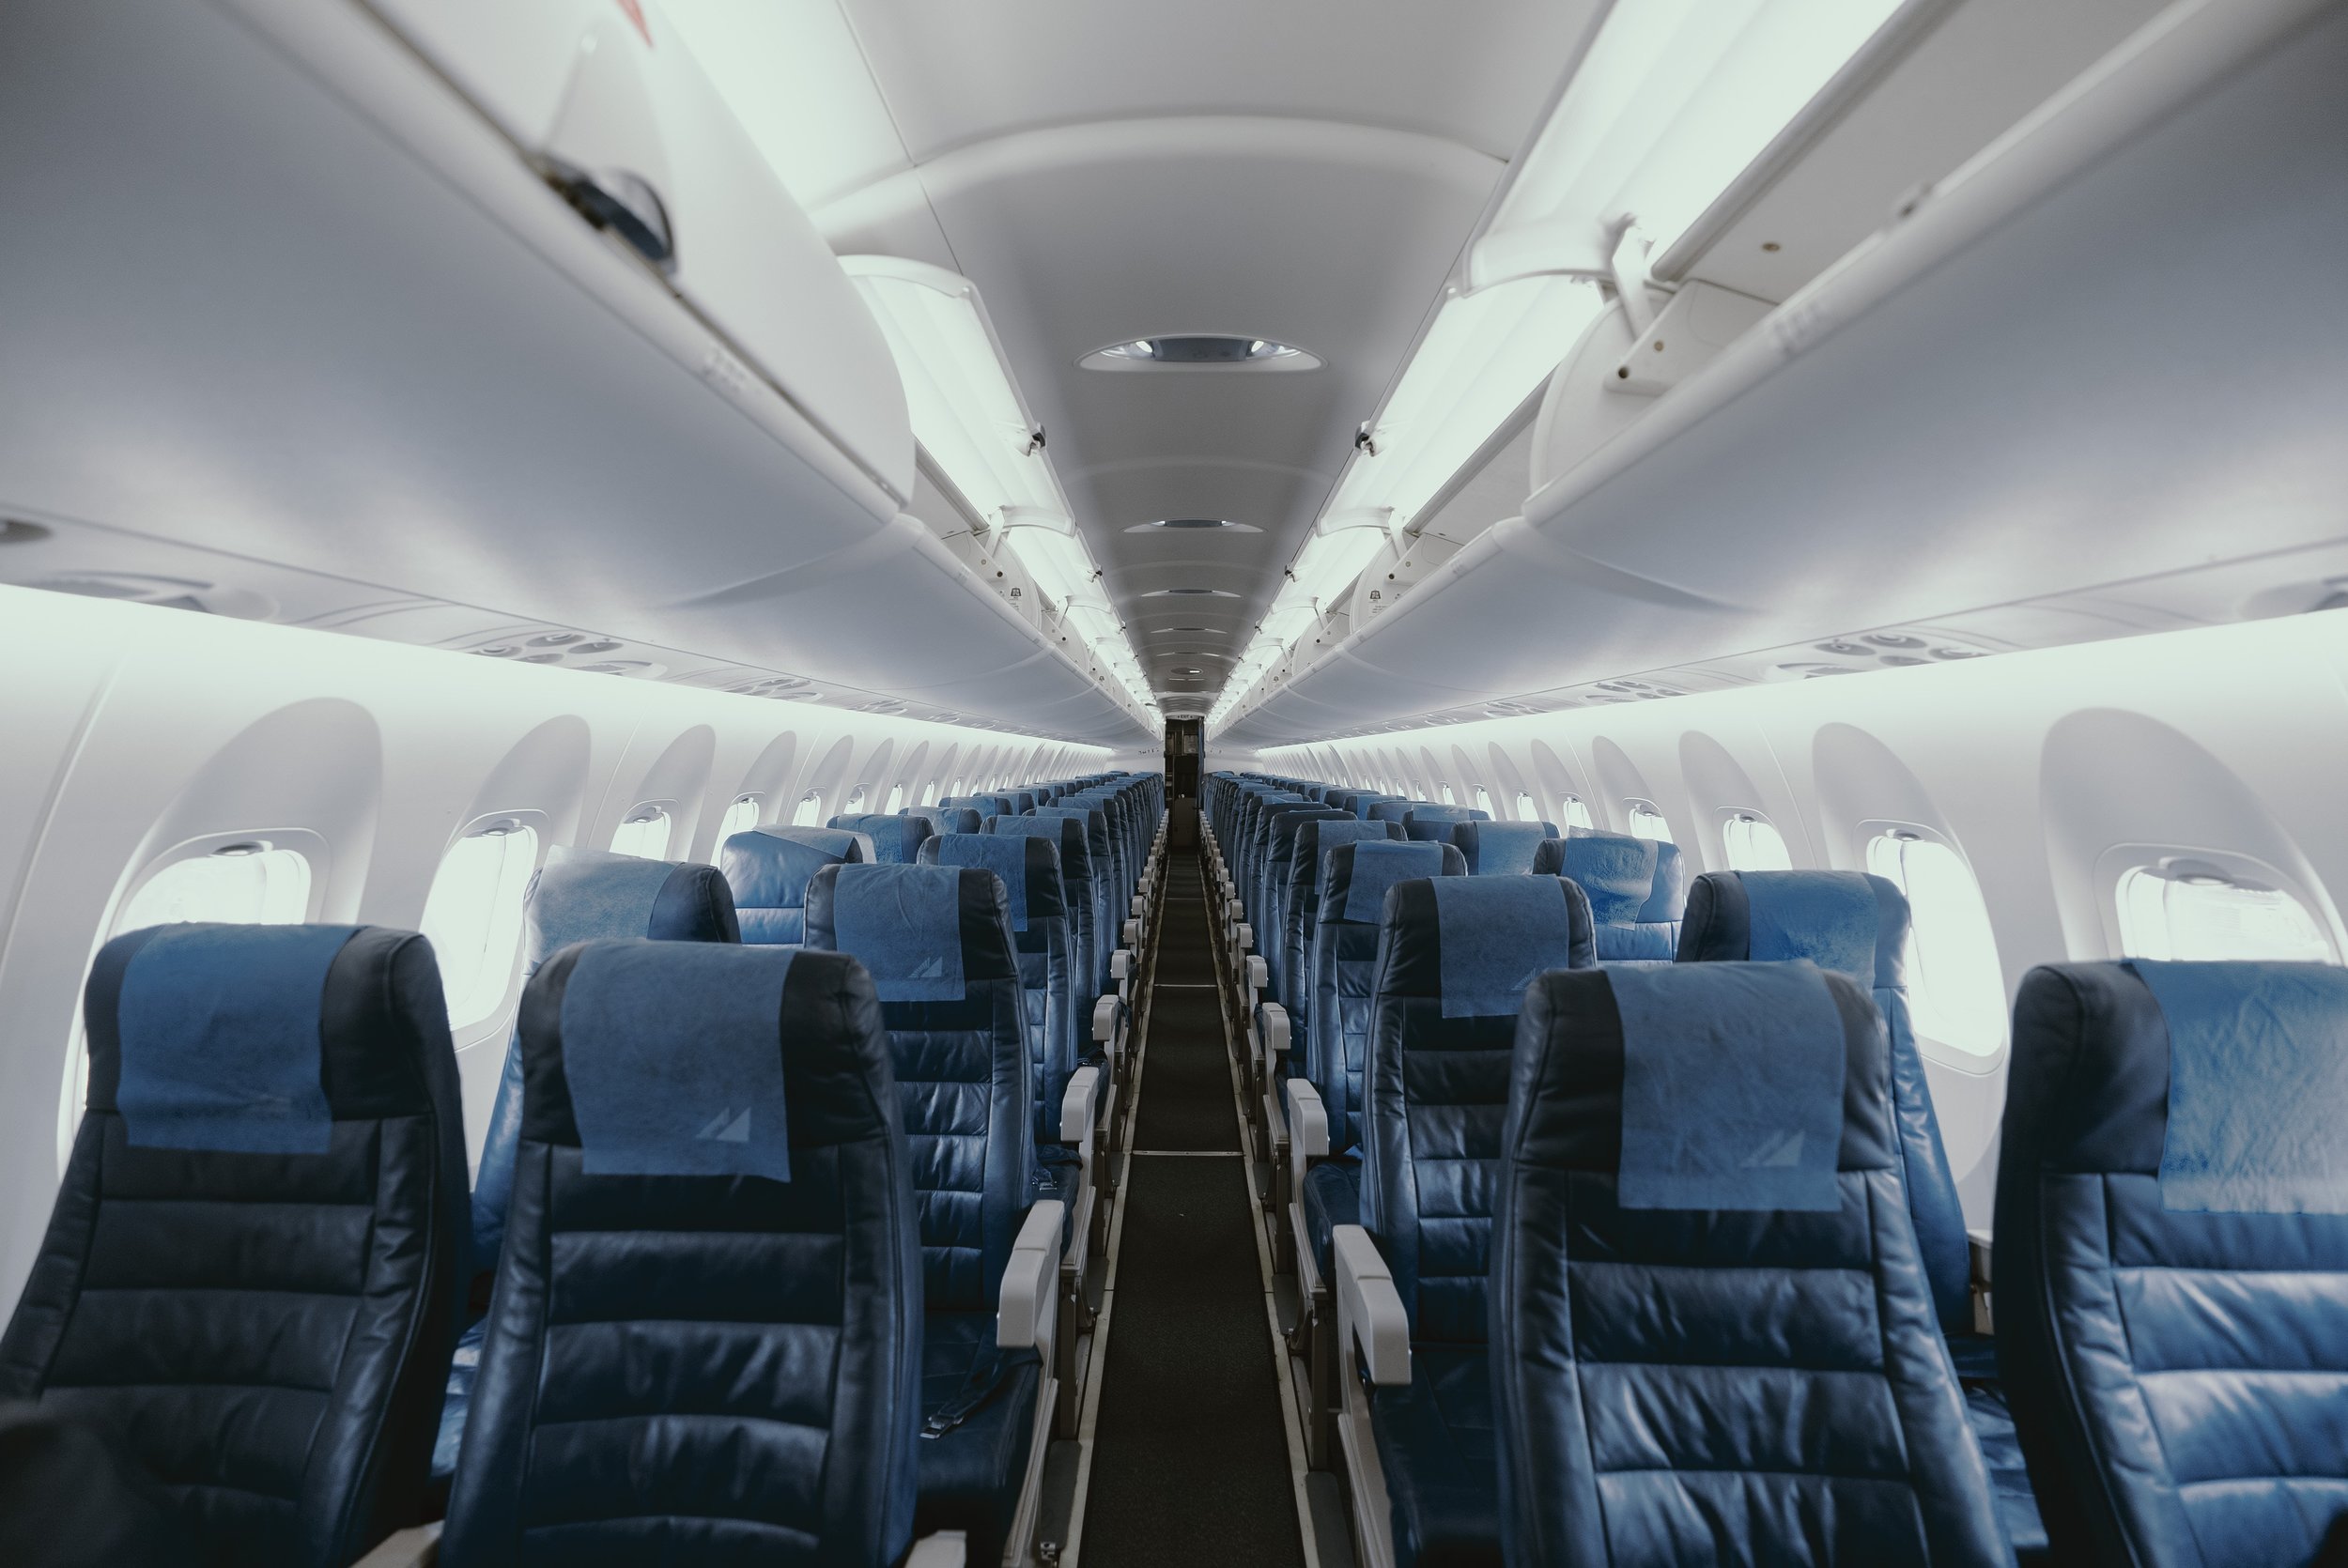 aircraft interior restorations, re-colouring &amp; reconditioning aircraft seats &amp; panels